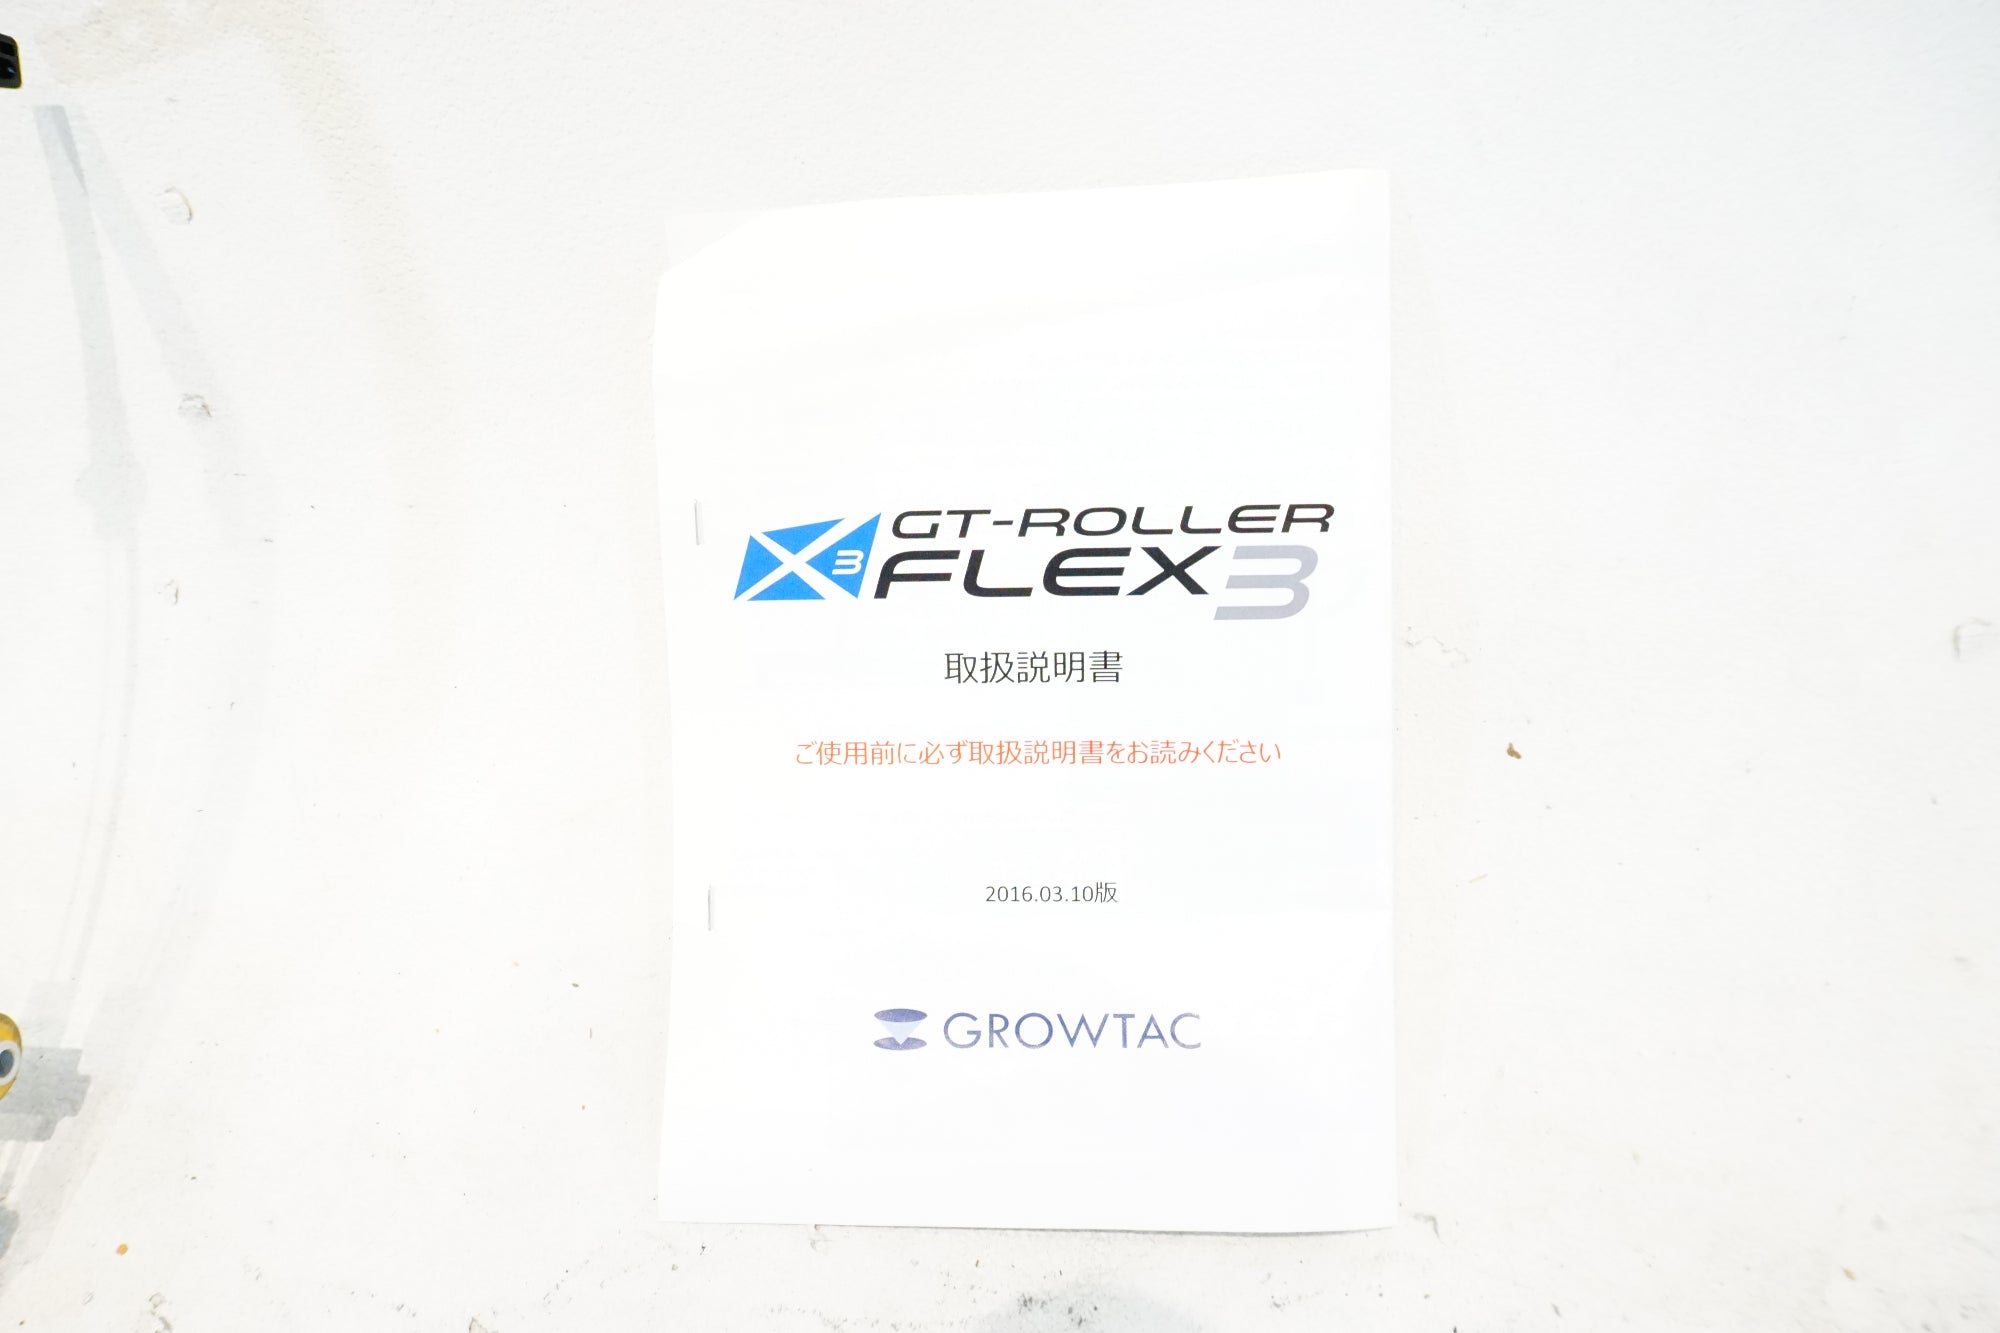 GROWTAC 「グロータック」 GT-ROLLER FLEX3 サイクルトレーナー / 横浜戸塚店